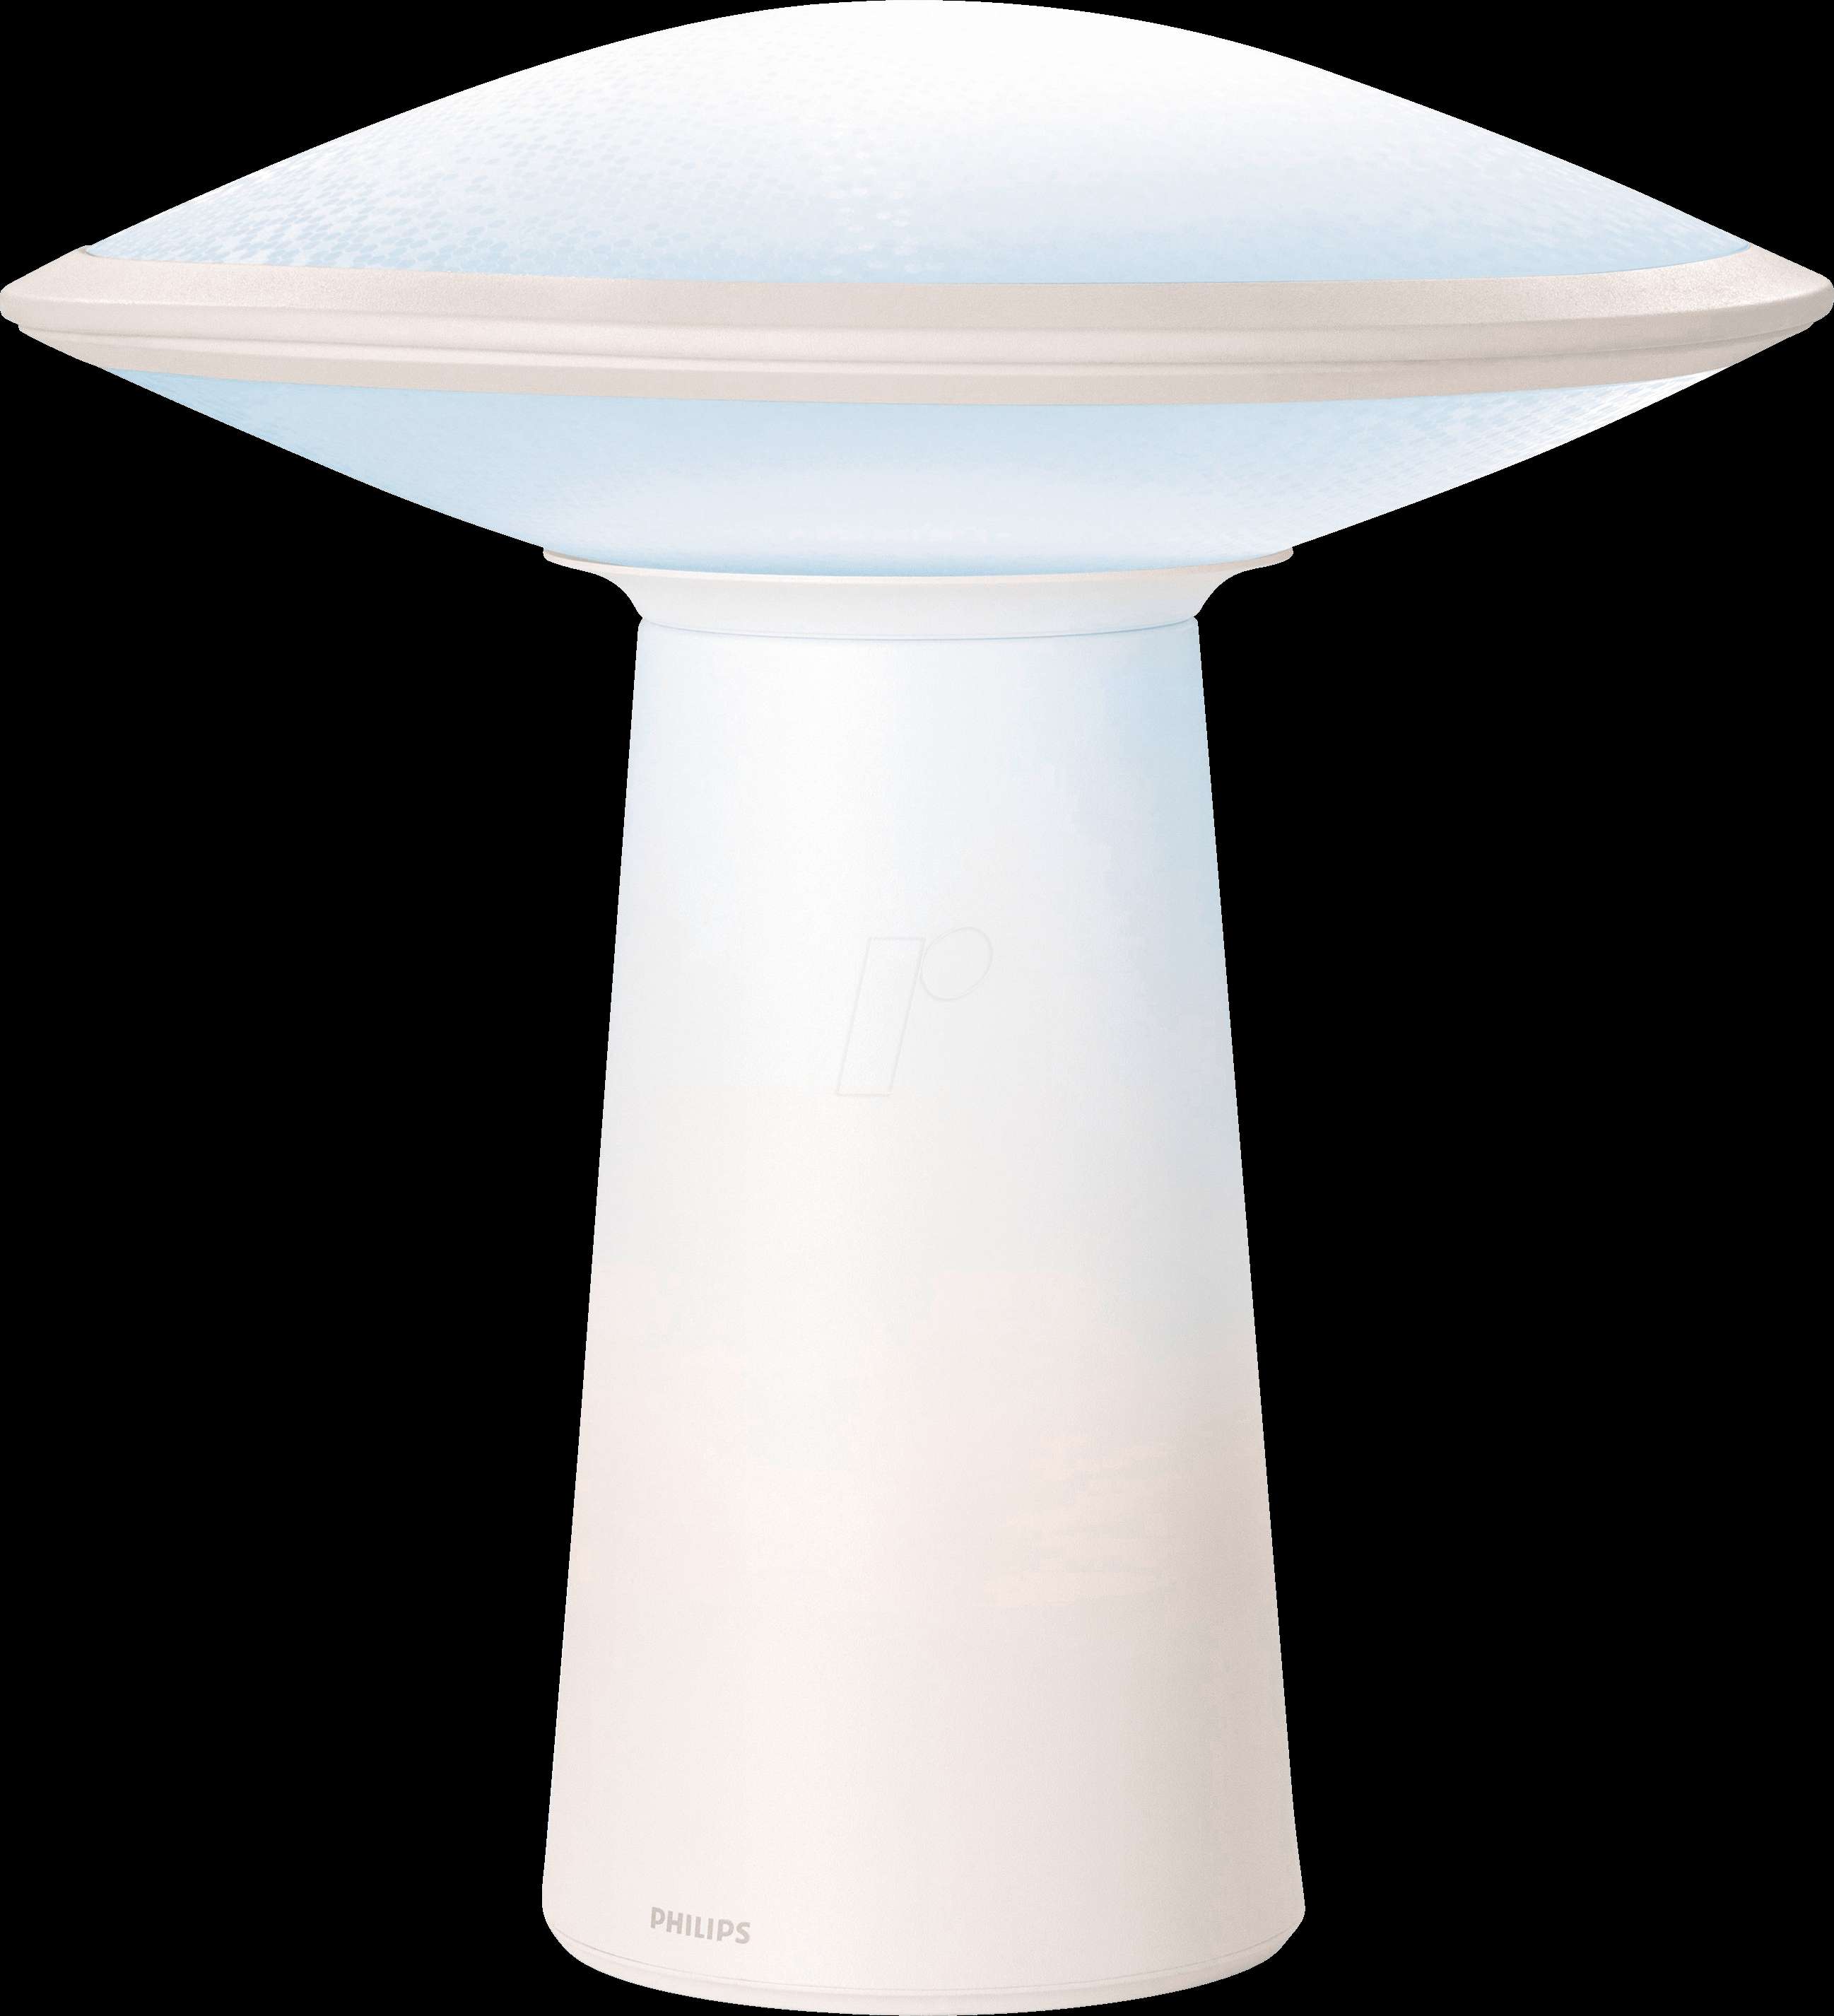 Philips Hue - Phoenix Table Lamp - White Ambiance